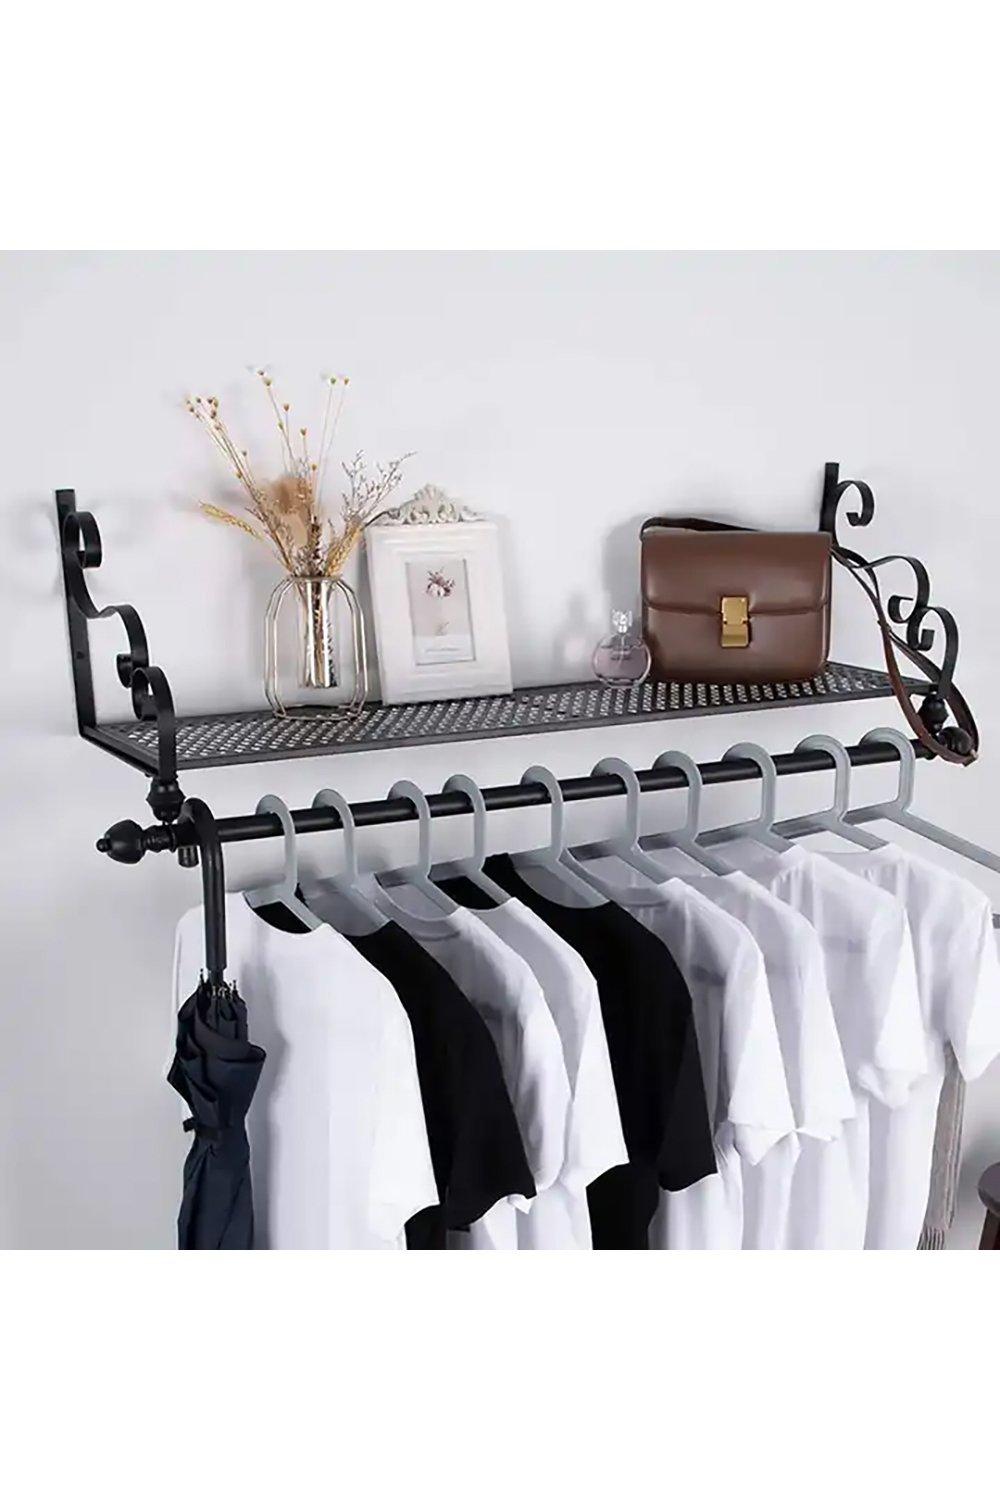 28 x 80cm Wall Mounted Metal Clothes Shelf Garment Shop Display Rack